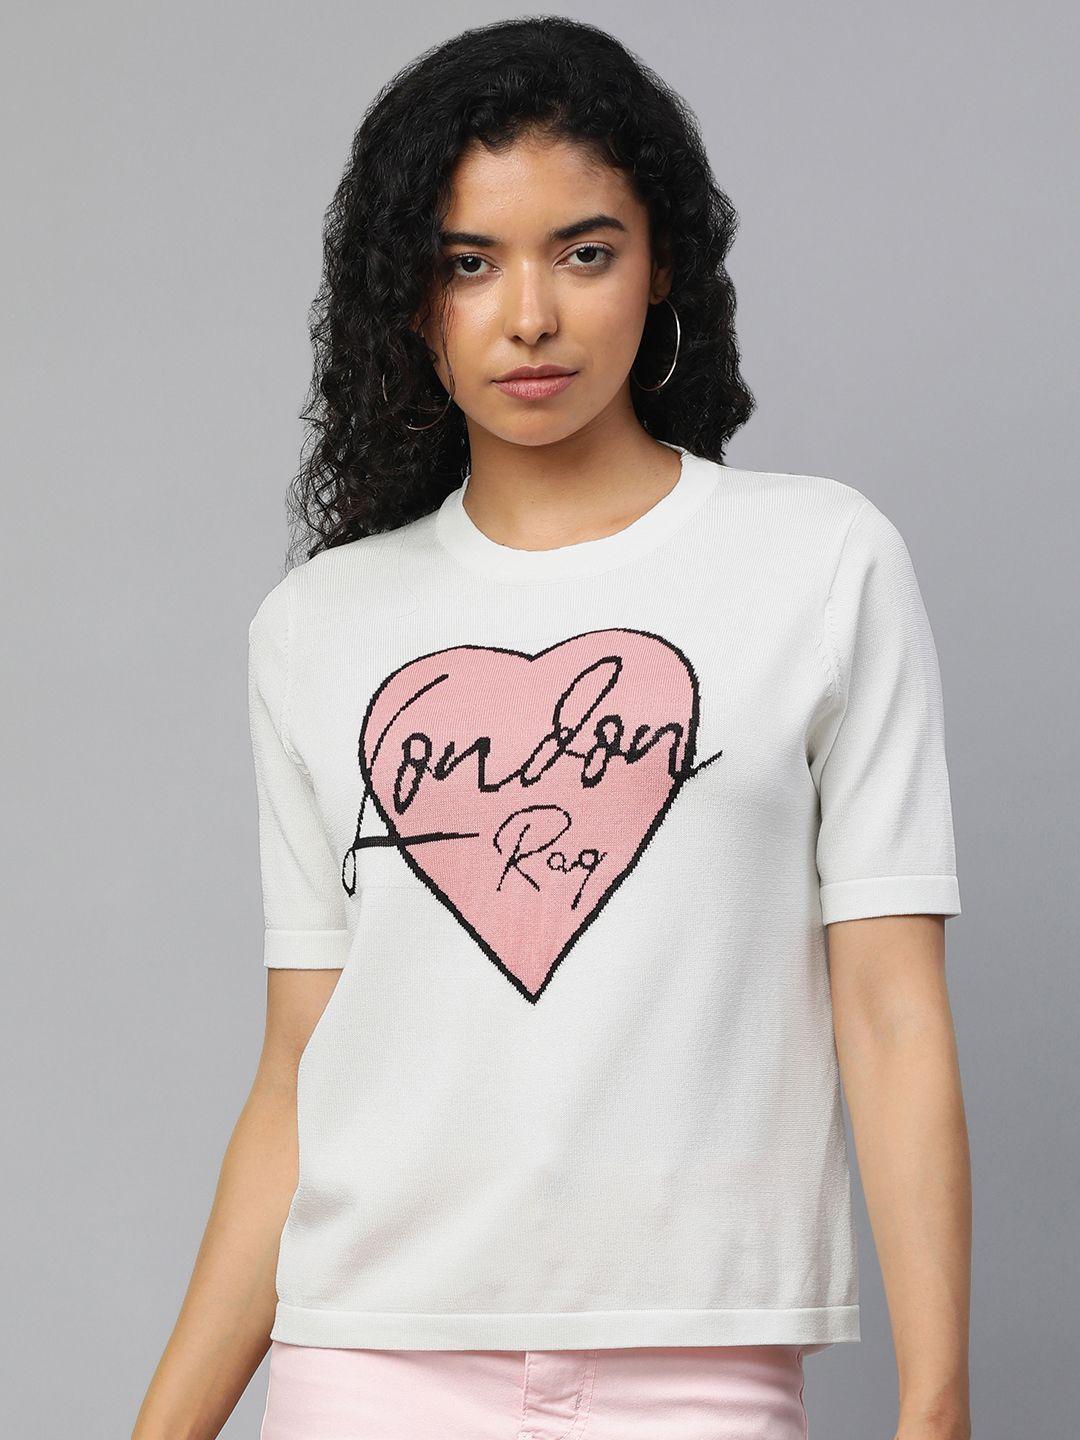 london rag women graphic printed t-shirt